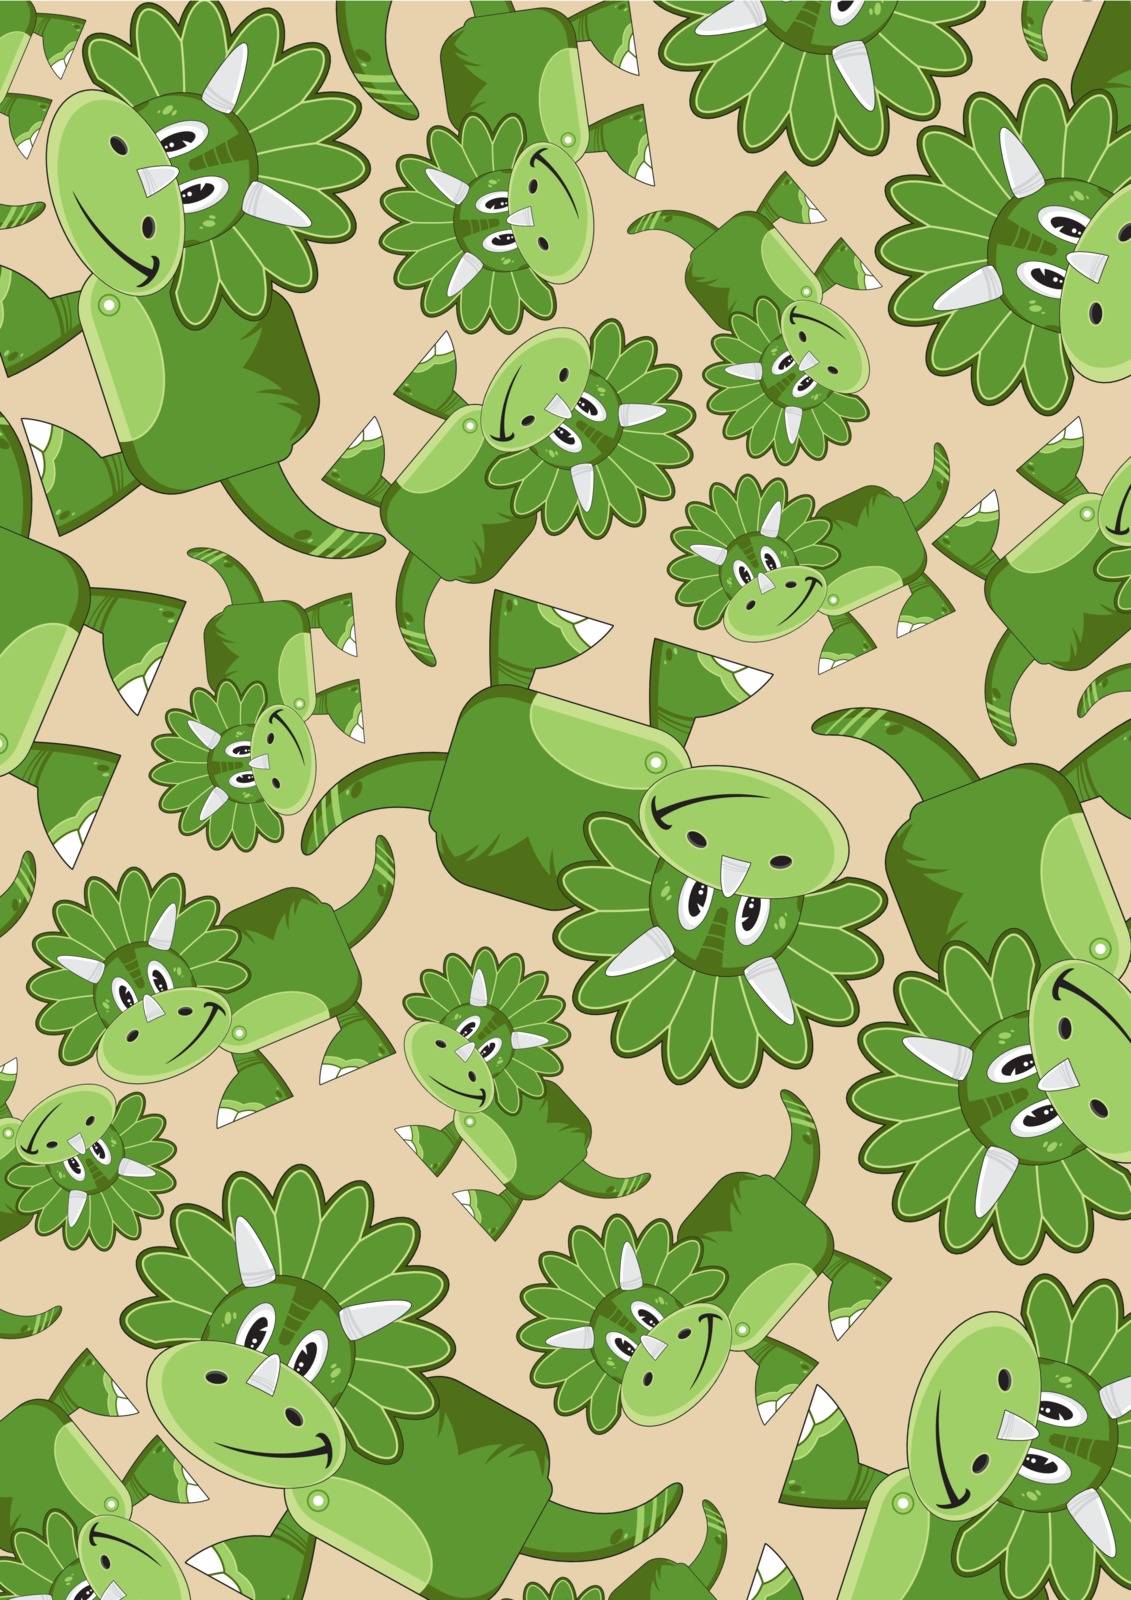 Adorably Cute Cartoon Triceratops Dinosaur Pattern Illustration - by Mark Murphy Creative